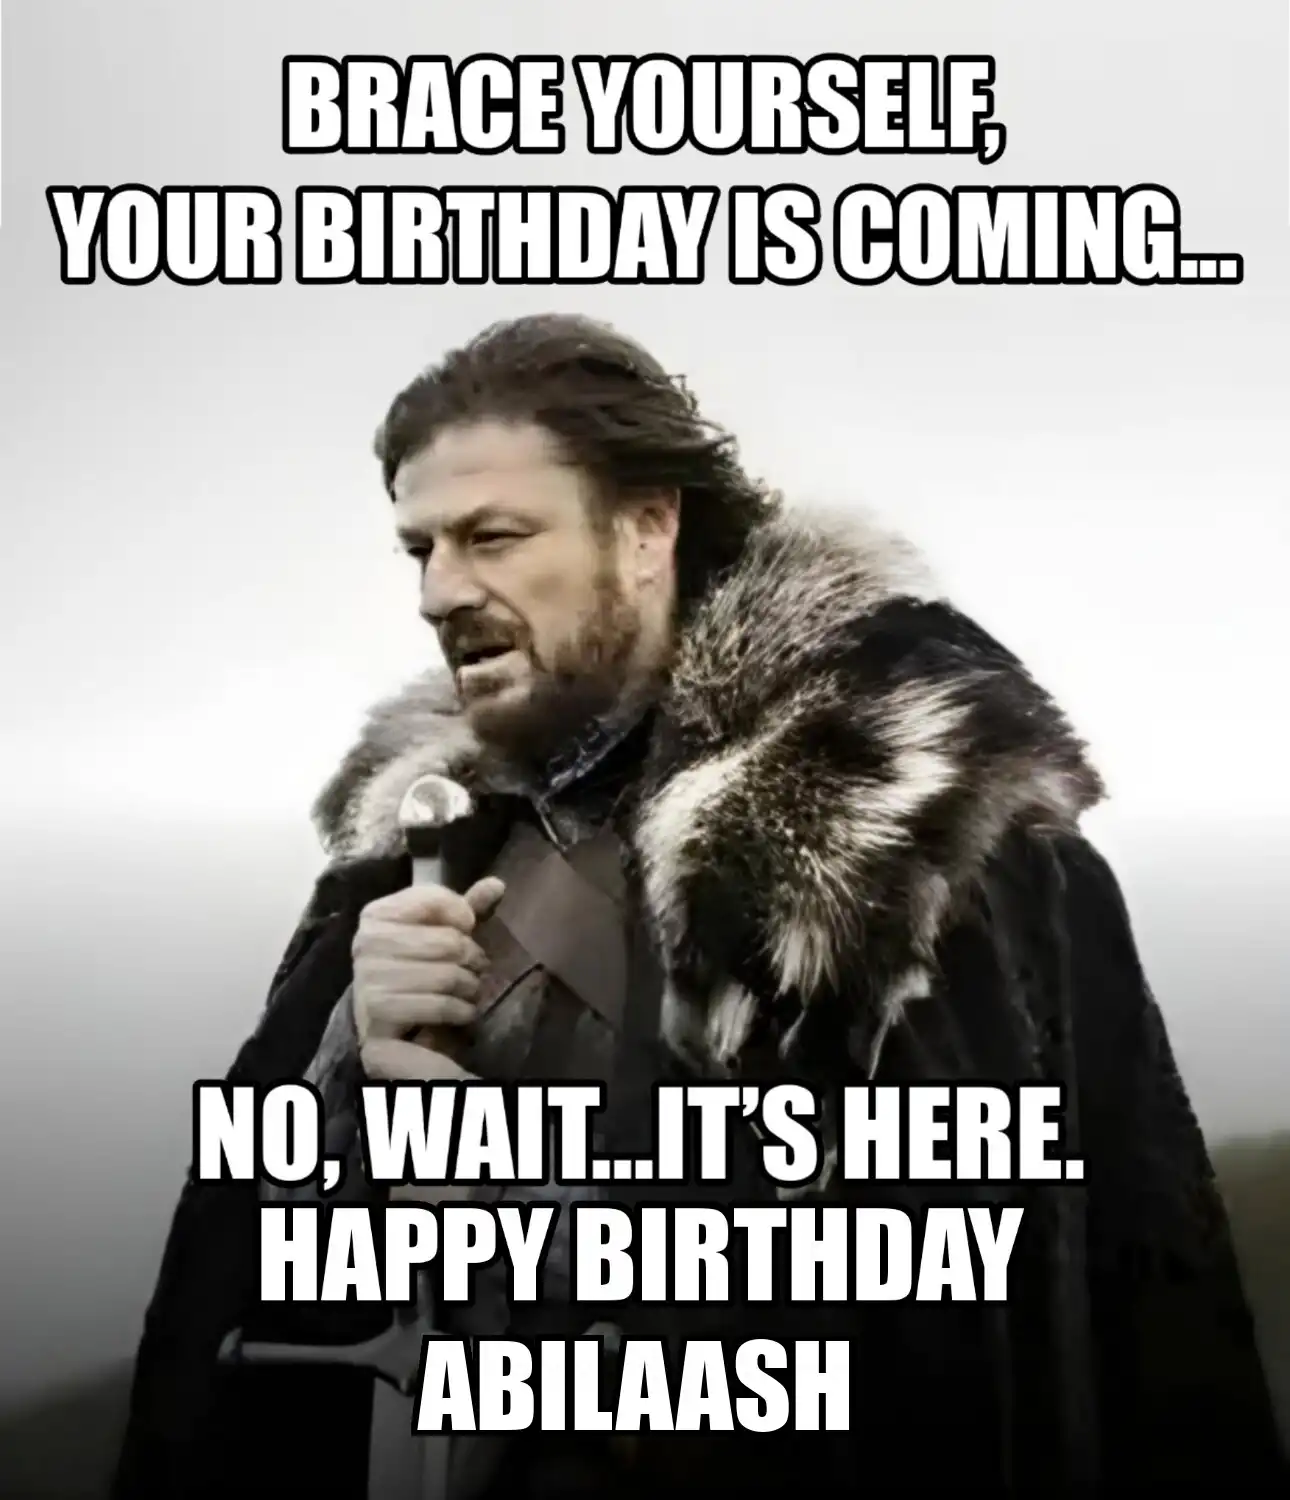 Happy Birthday Abilaash Brace Yourself Your Birthday Is Coming Meme